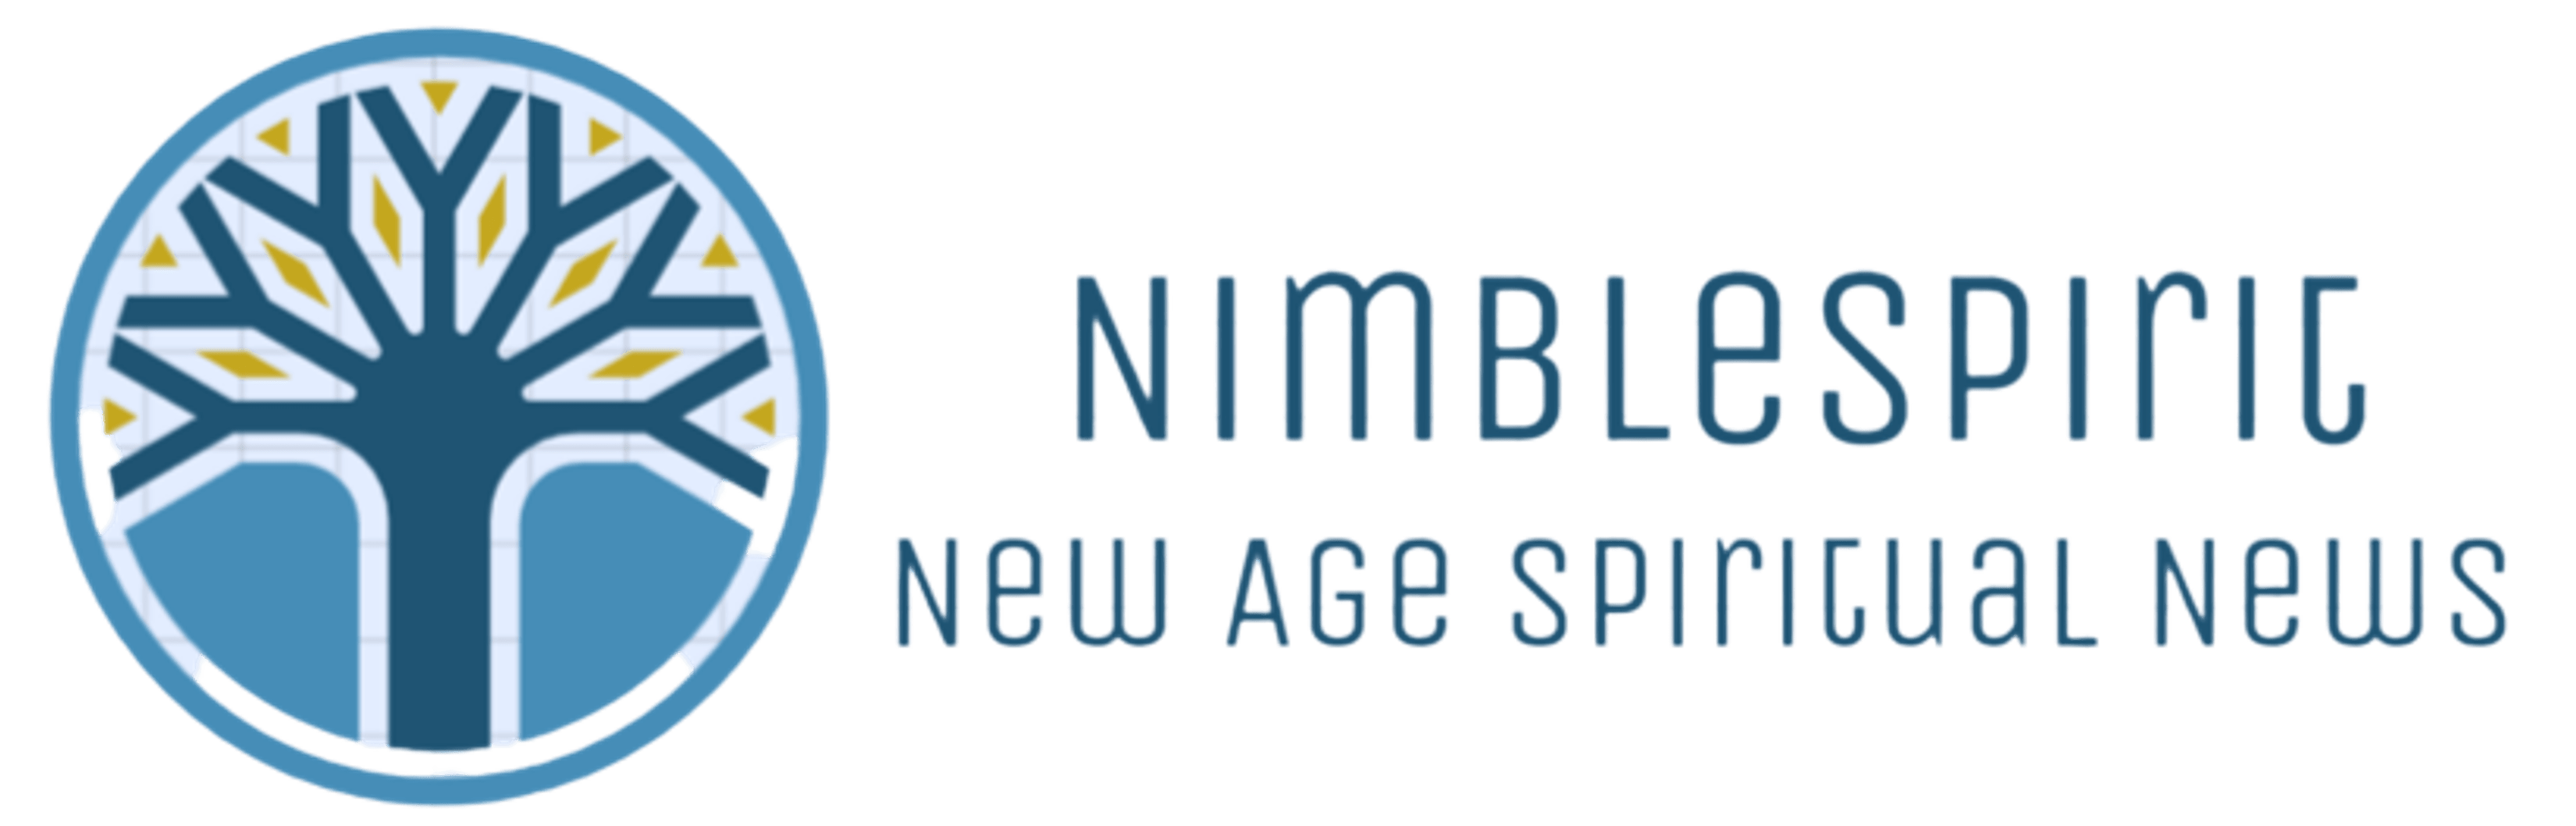 Nimble Spirit